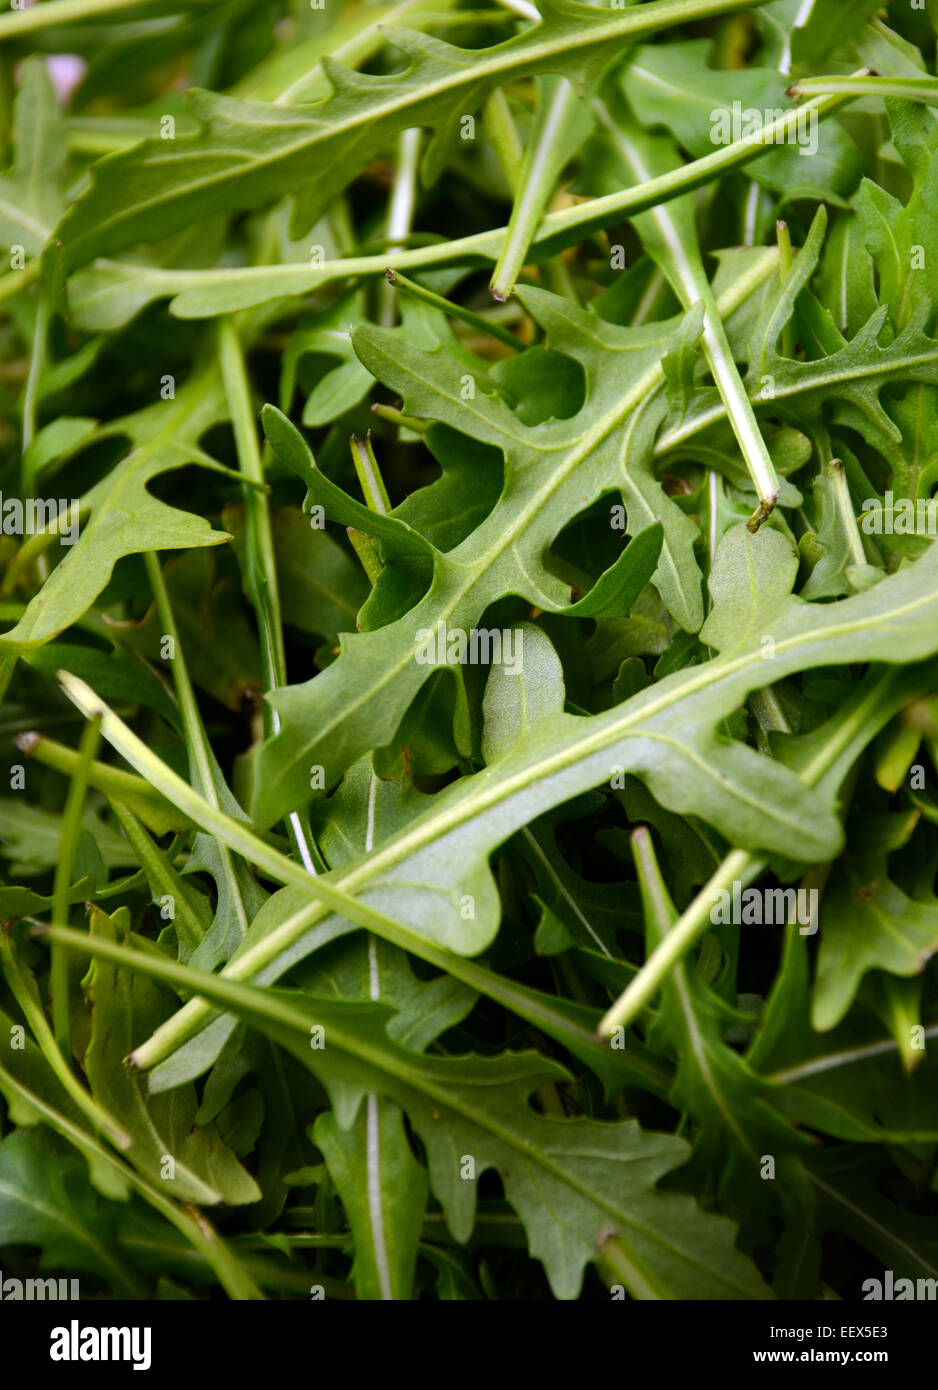 Fresh arugula / salad rocket / roquette / rucola leaves Stock Photo